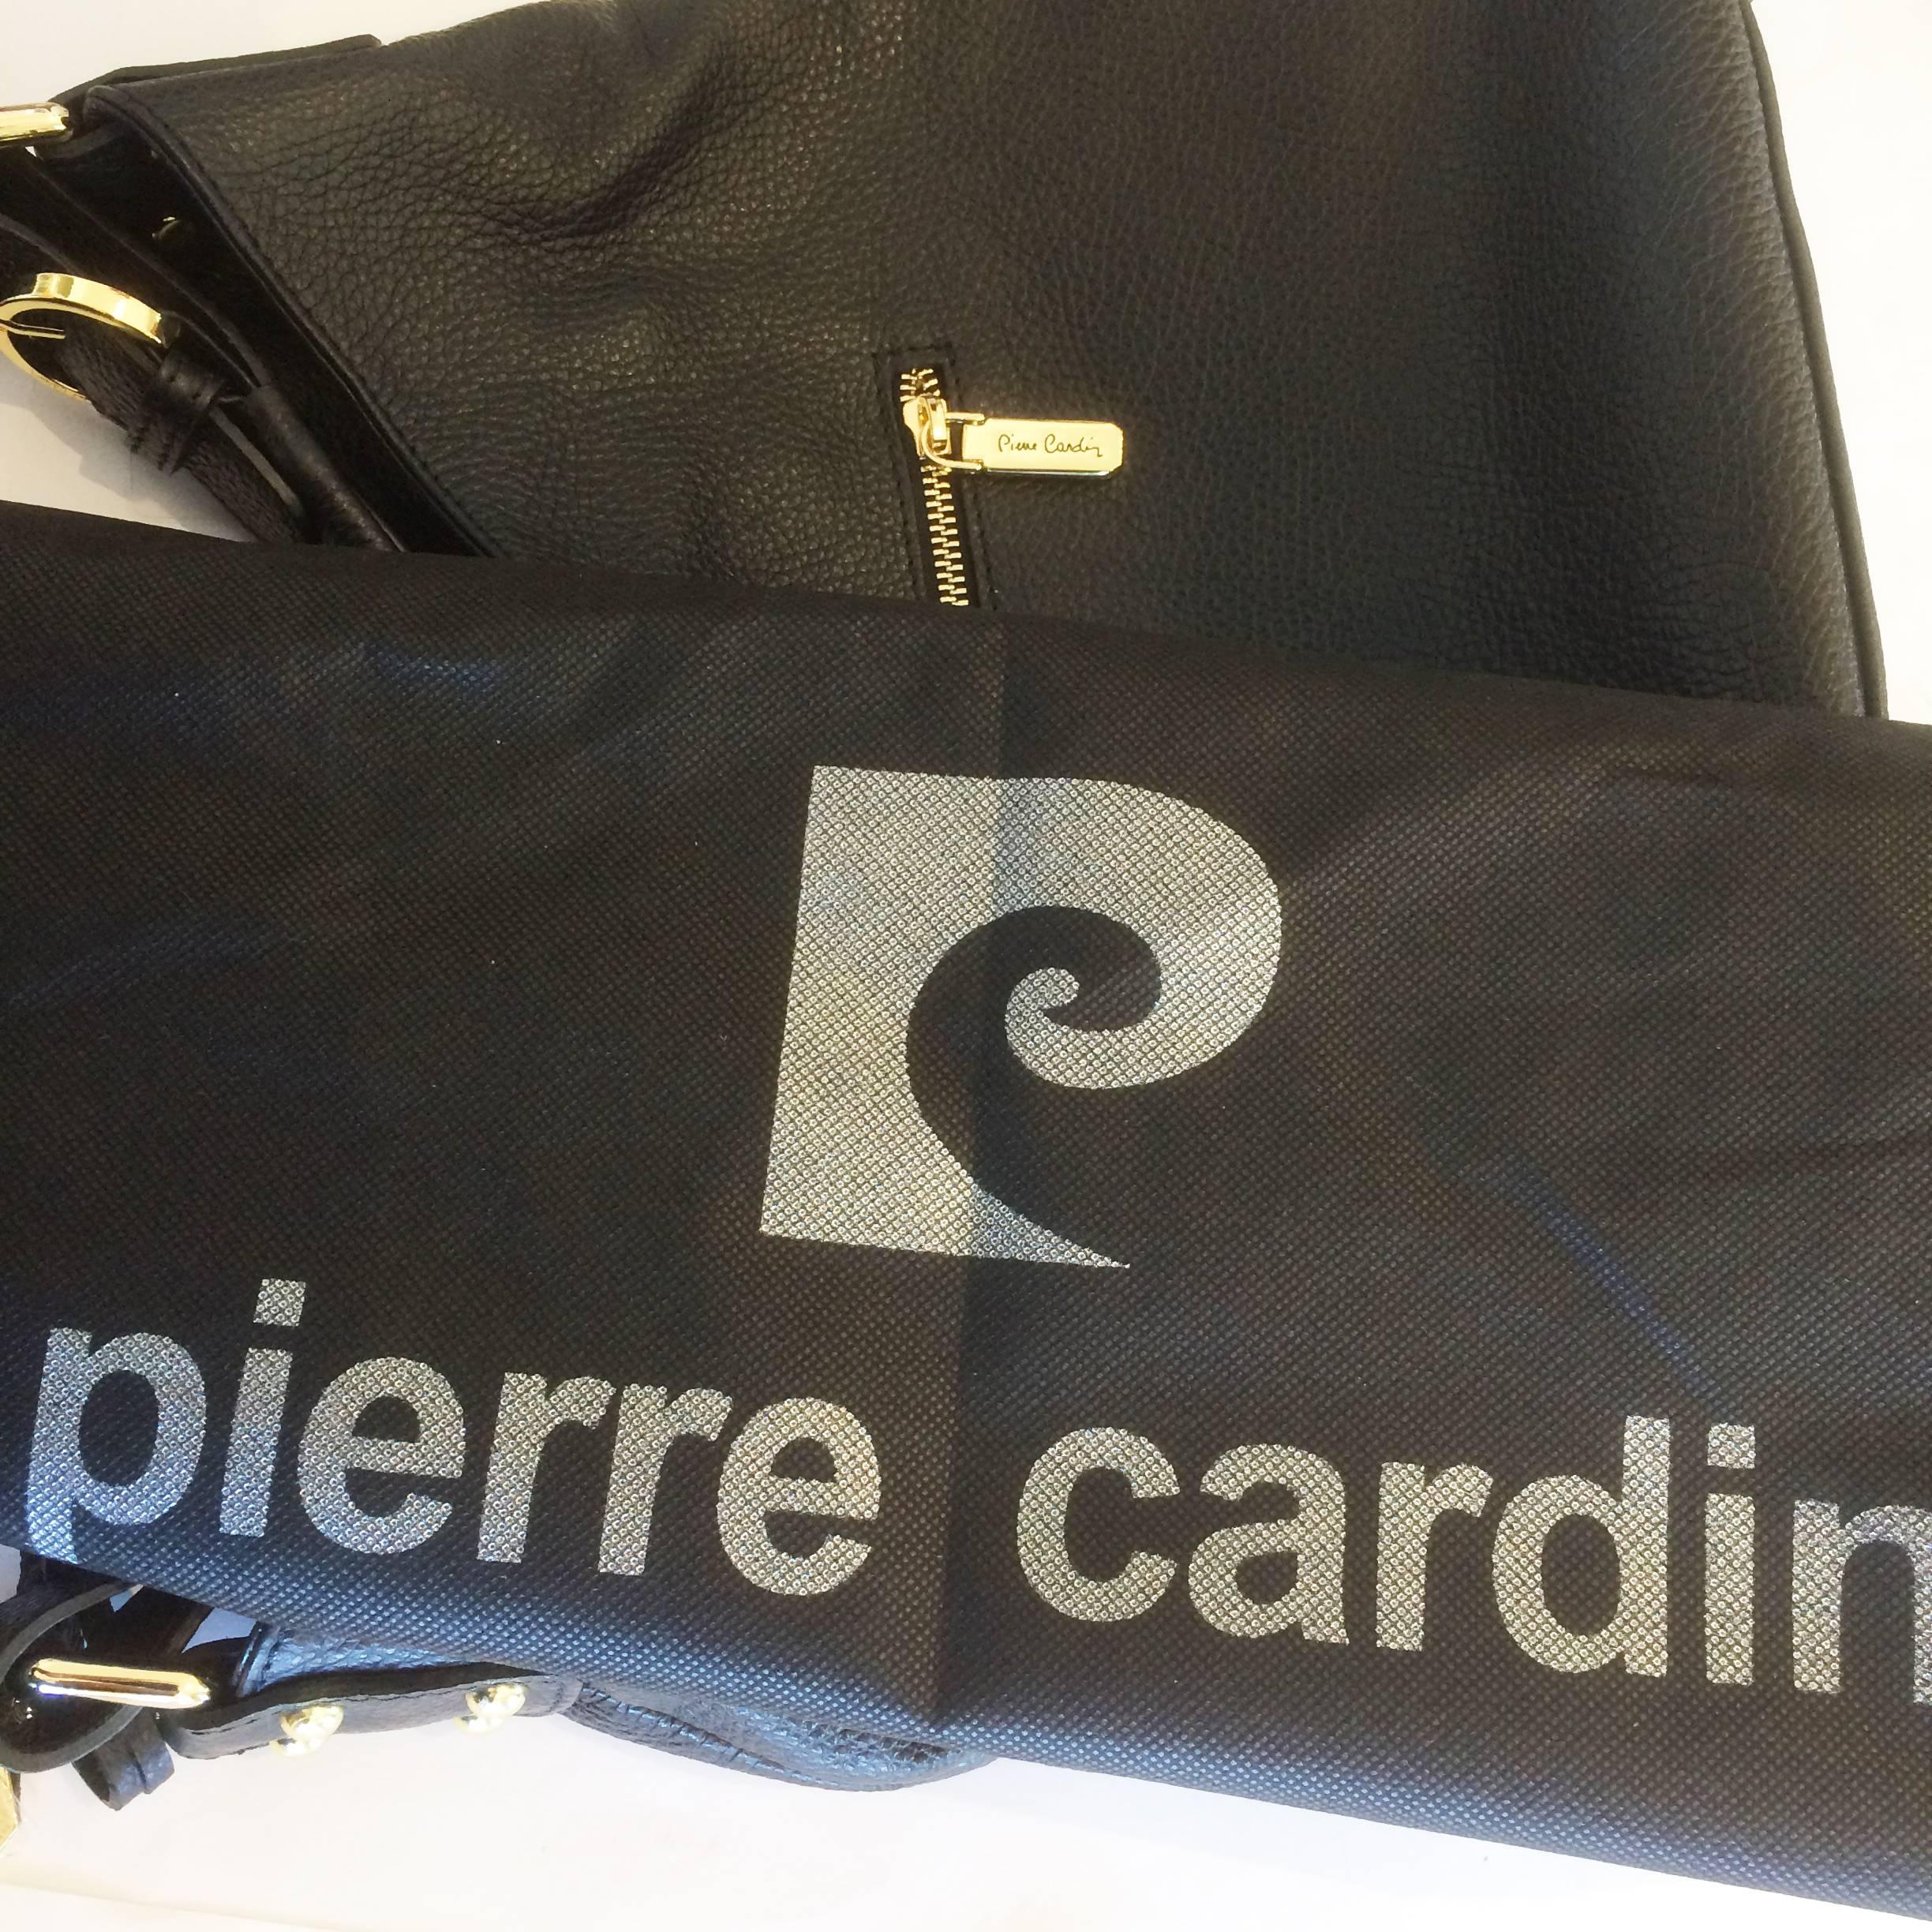 Pierre Cardin New black leather hobo bag handbag 2